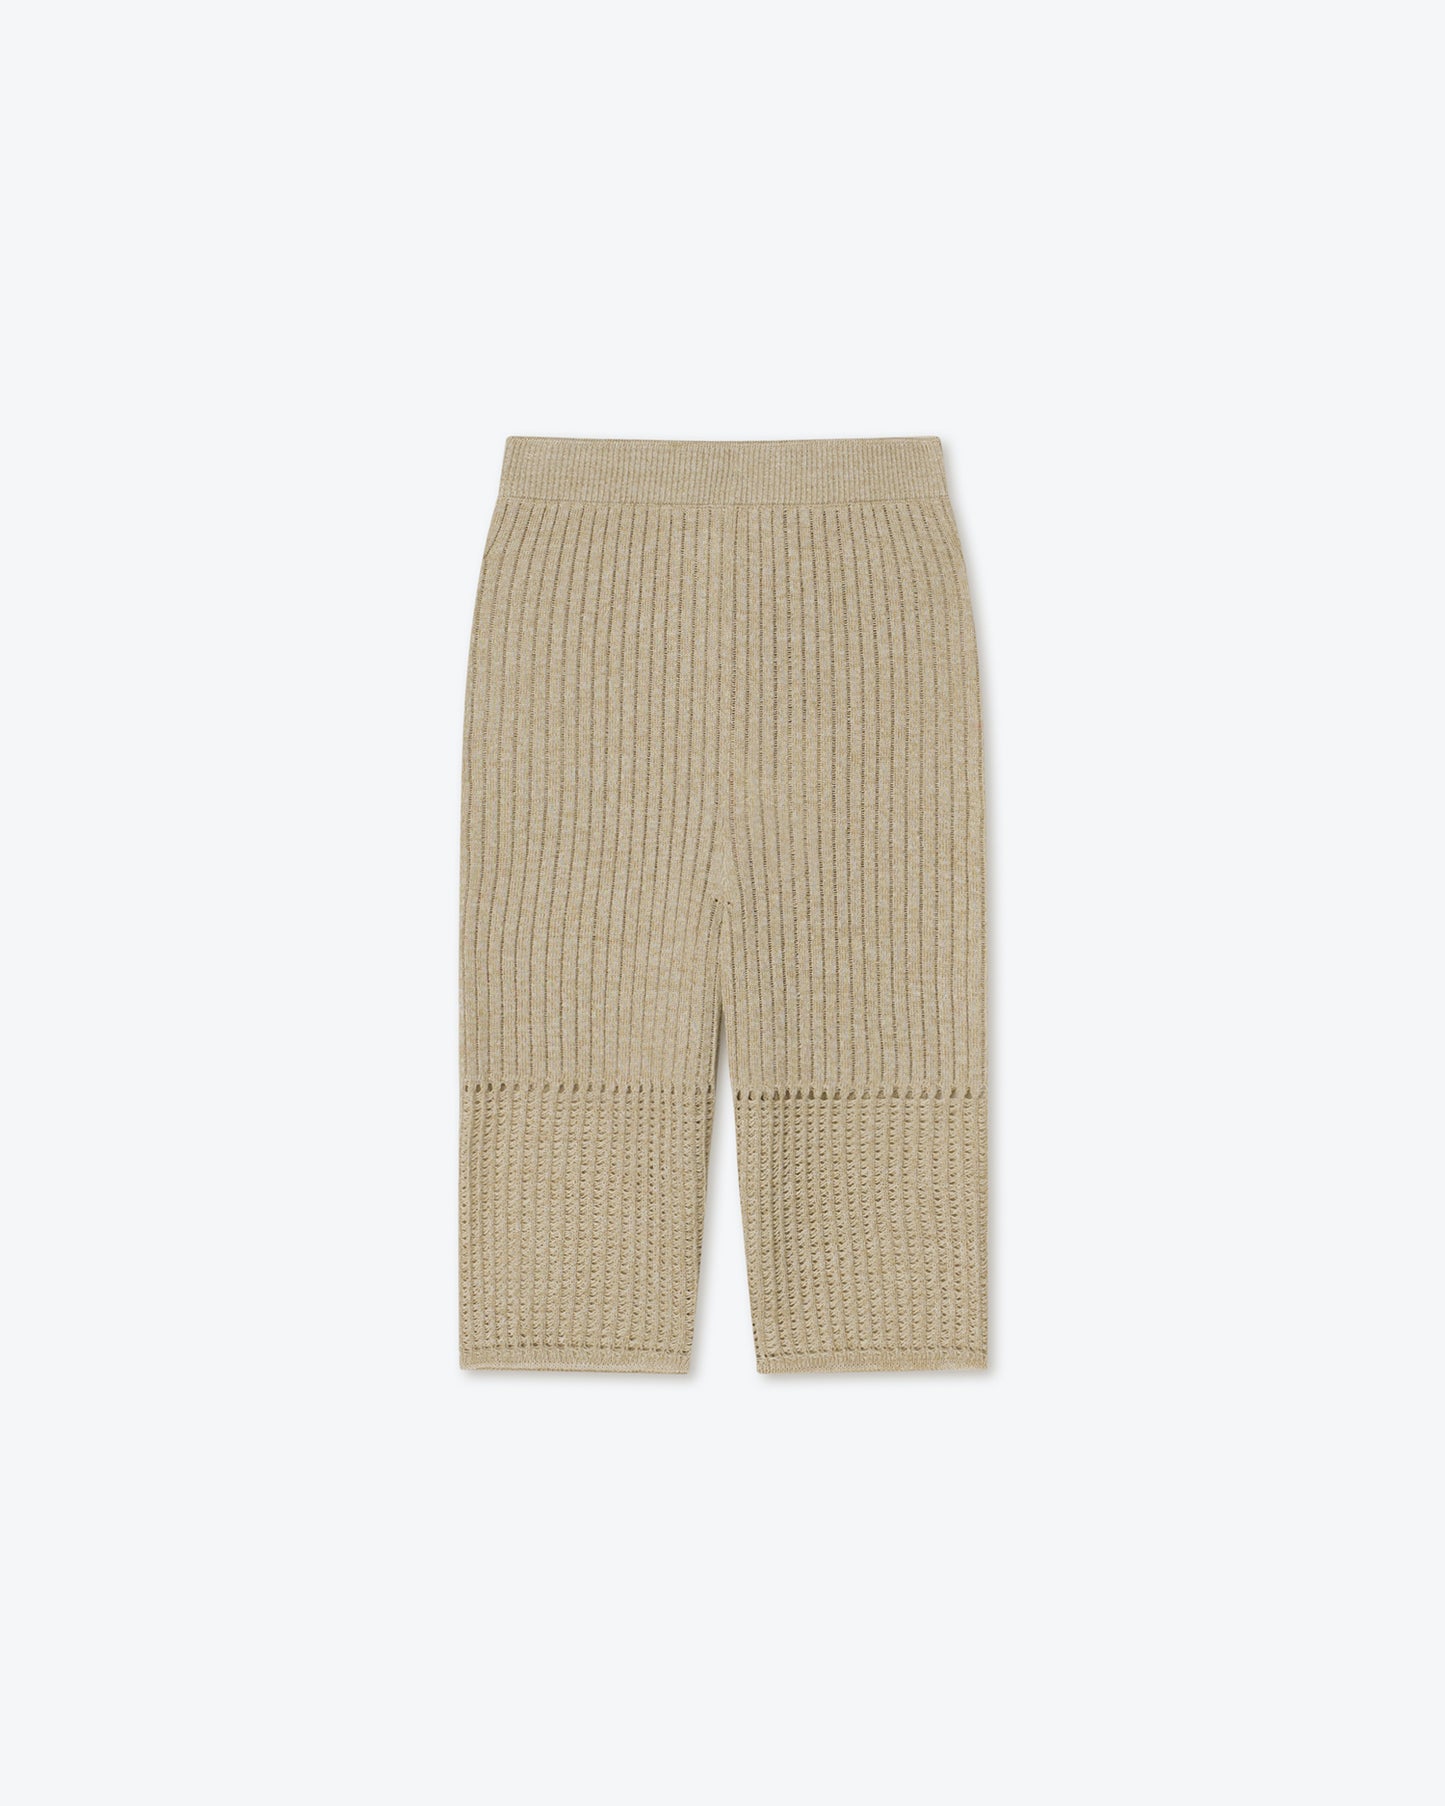 Jessa - Archive Ribbed-Knit Shorts - Creme